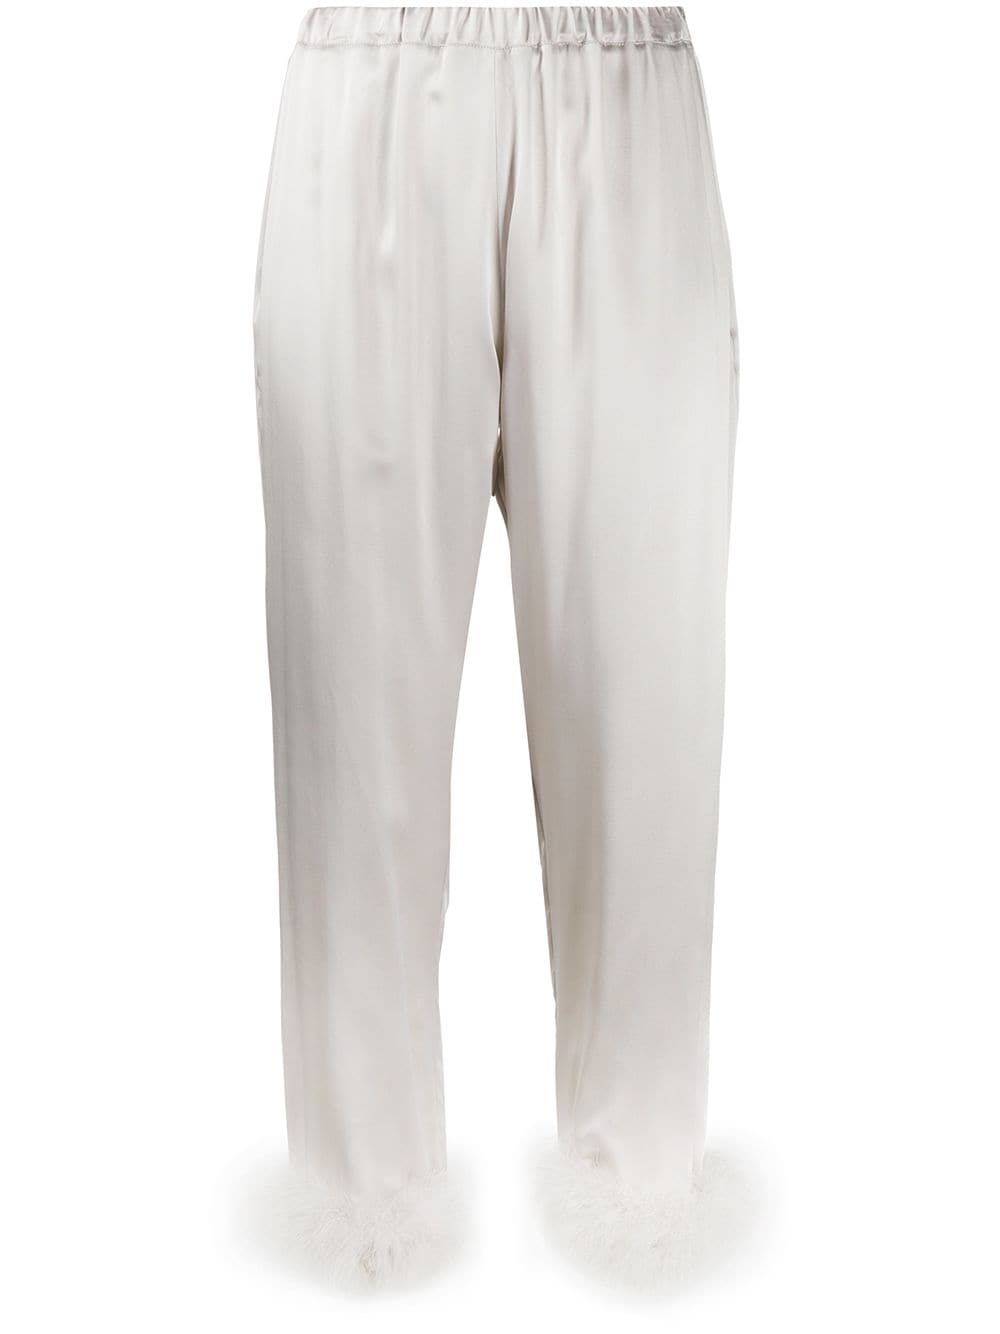 Image 1 of Gilda & Pearl Pantaloni da pigiama